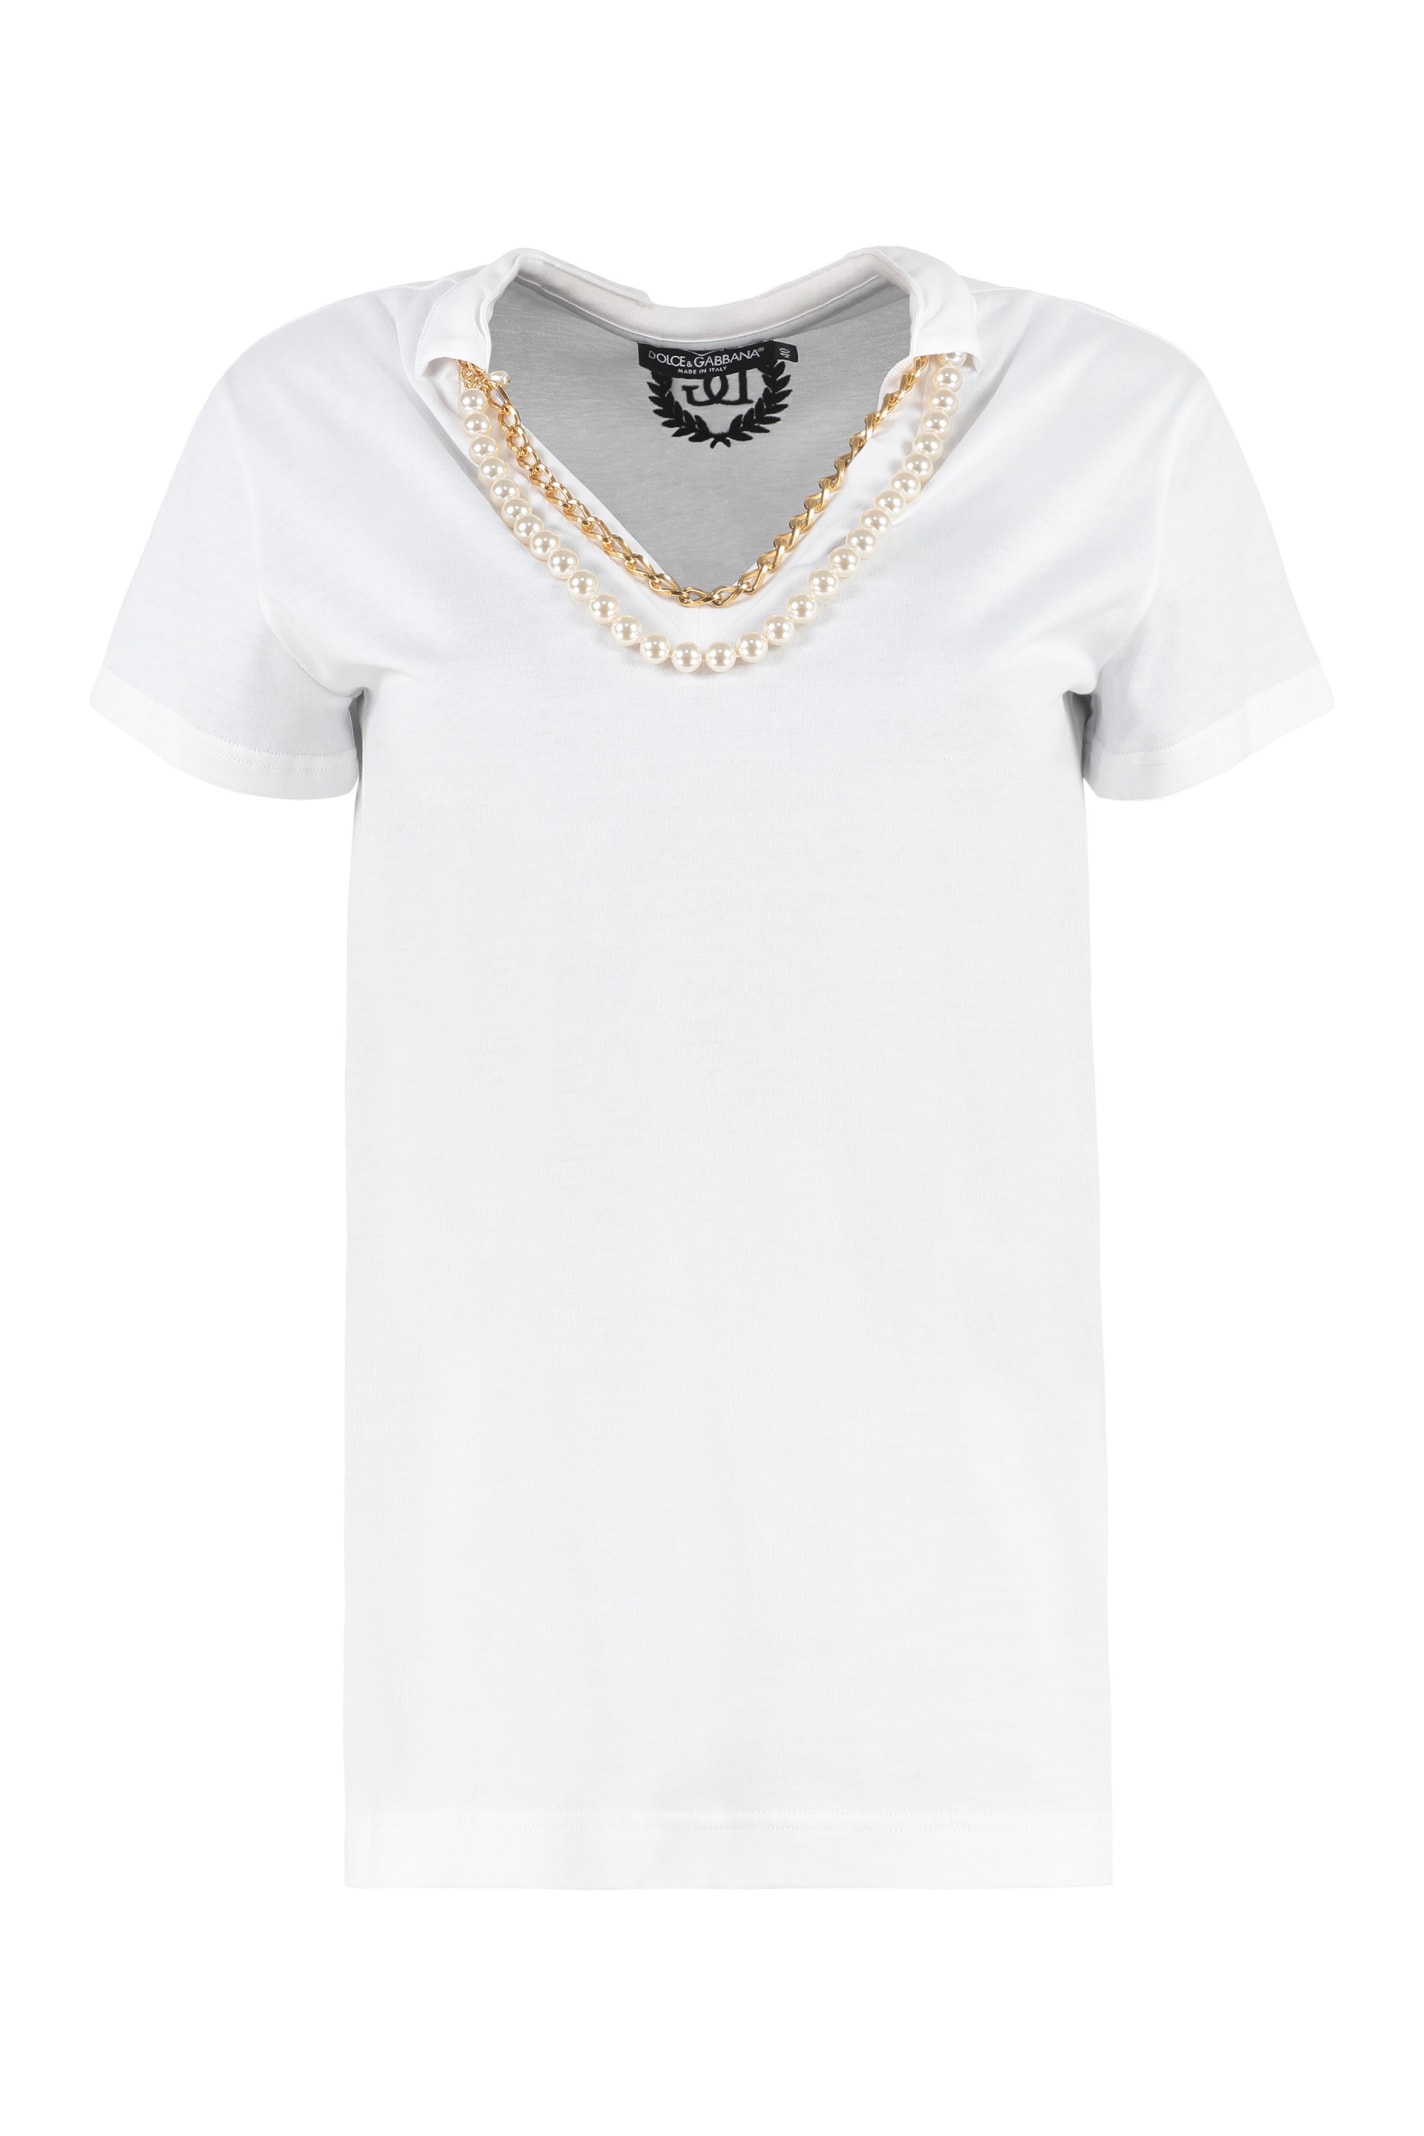 Dolce & Gabbana Necklace Cotton T-shirt